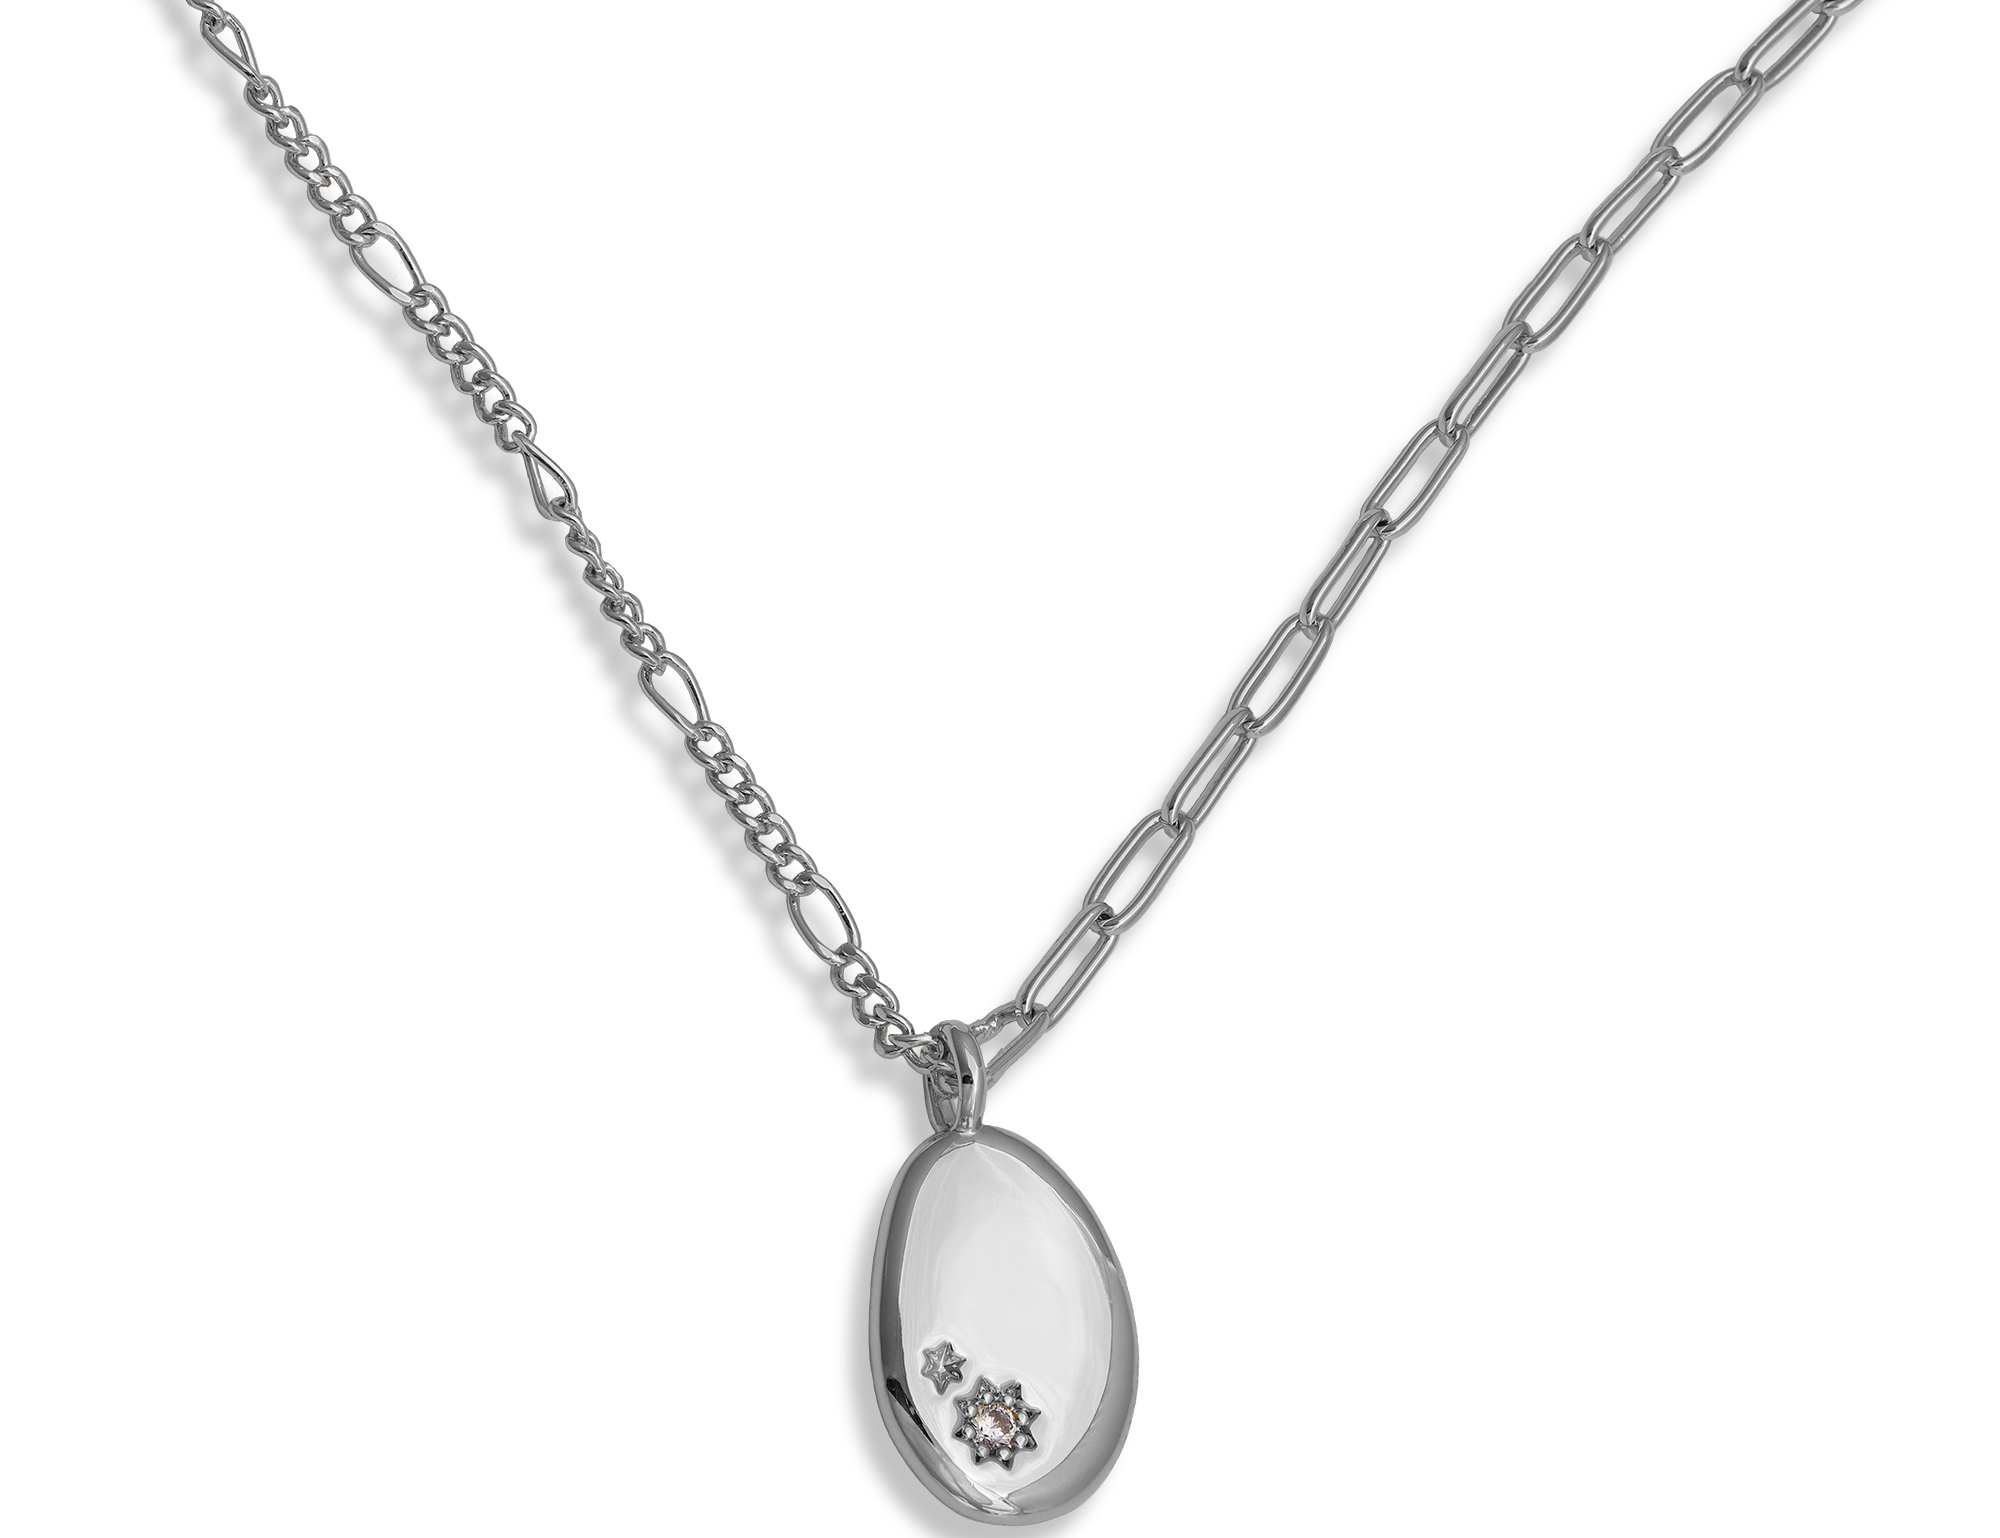 Minimalist Pebble Double Chain Necklace